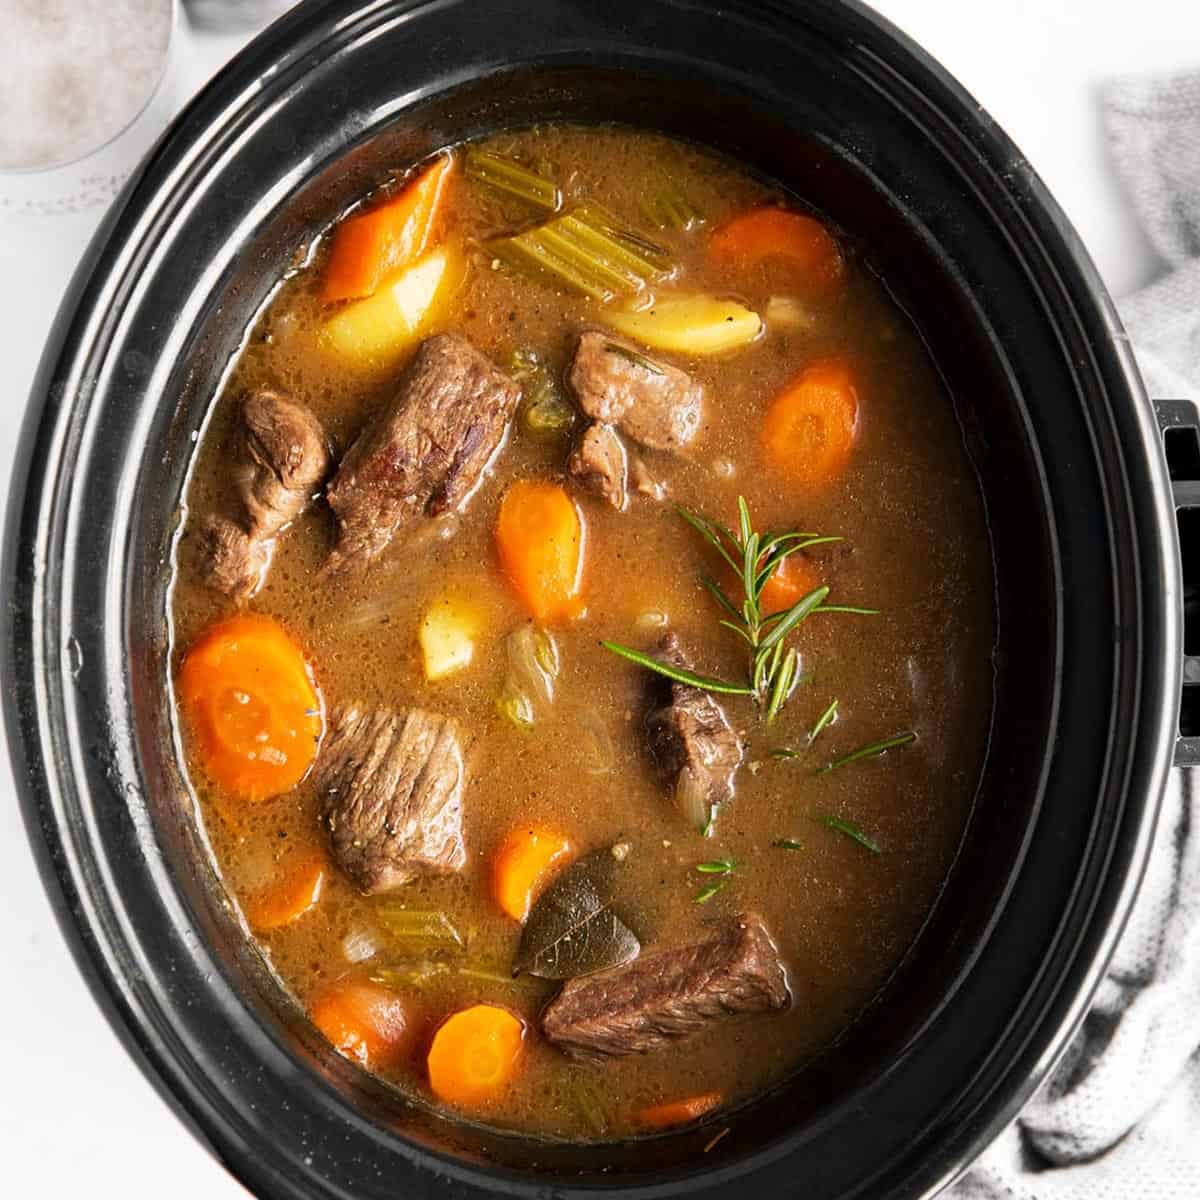 https://www.savorynothings.com/wp-content/uploads/2016/02/slow-cooker-irish-beef-stew-image-sq.jpg